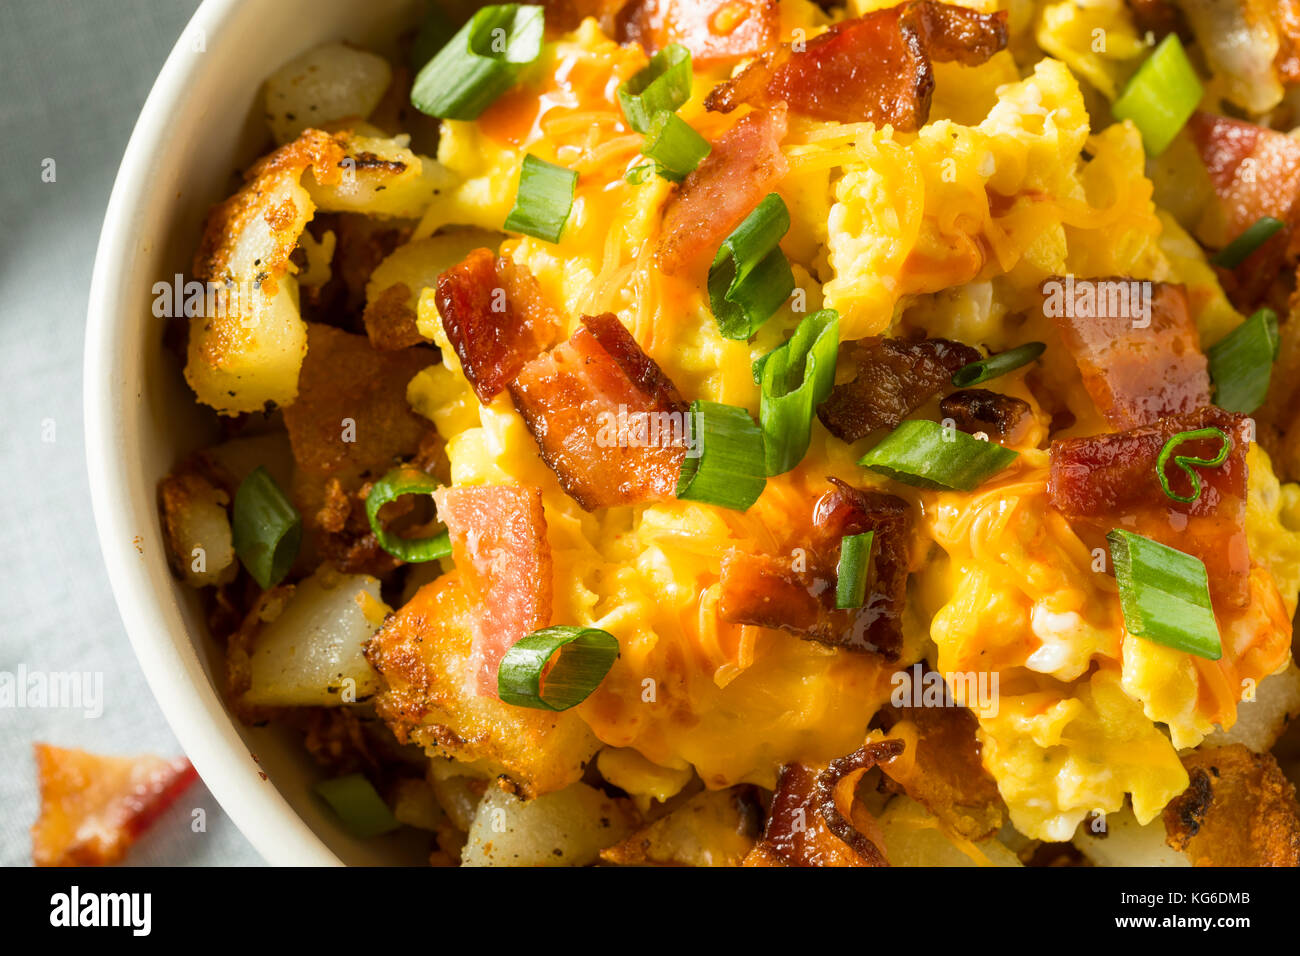 Homemade Egg and Potato Breakfast Bowl with Bacon Stock Photo - Alamy